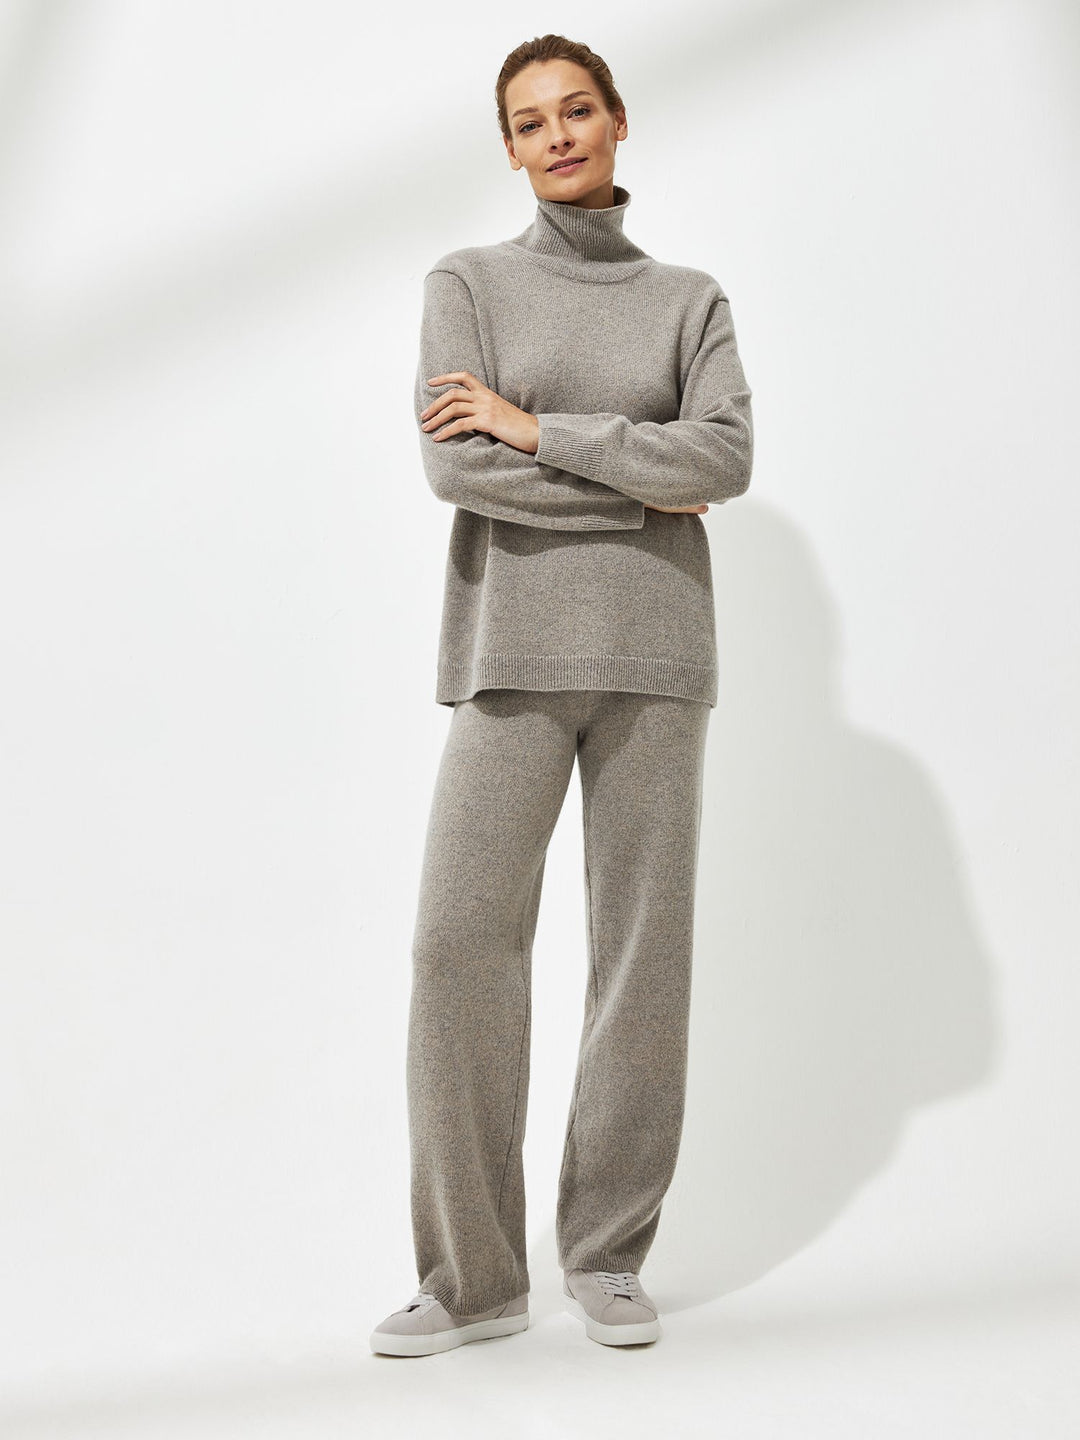 cashmere - merino - sweater with high collar in coffee - grey - melange